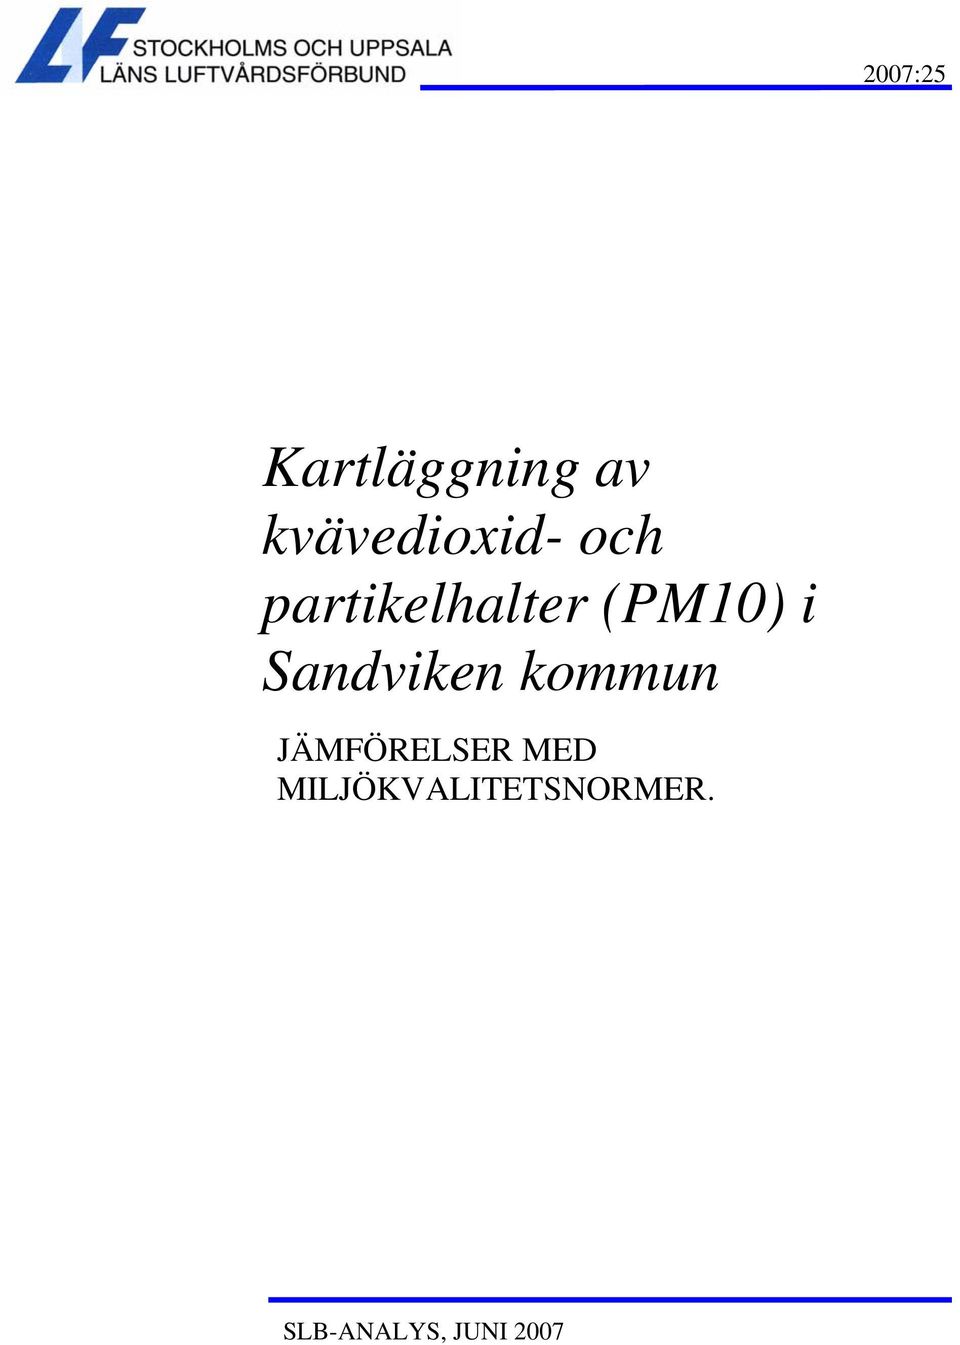 (PM10) i Sandviken kommun